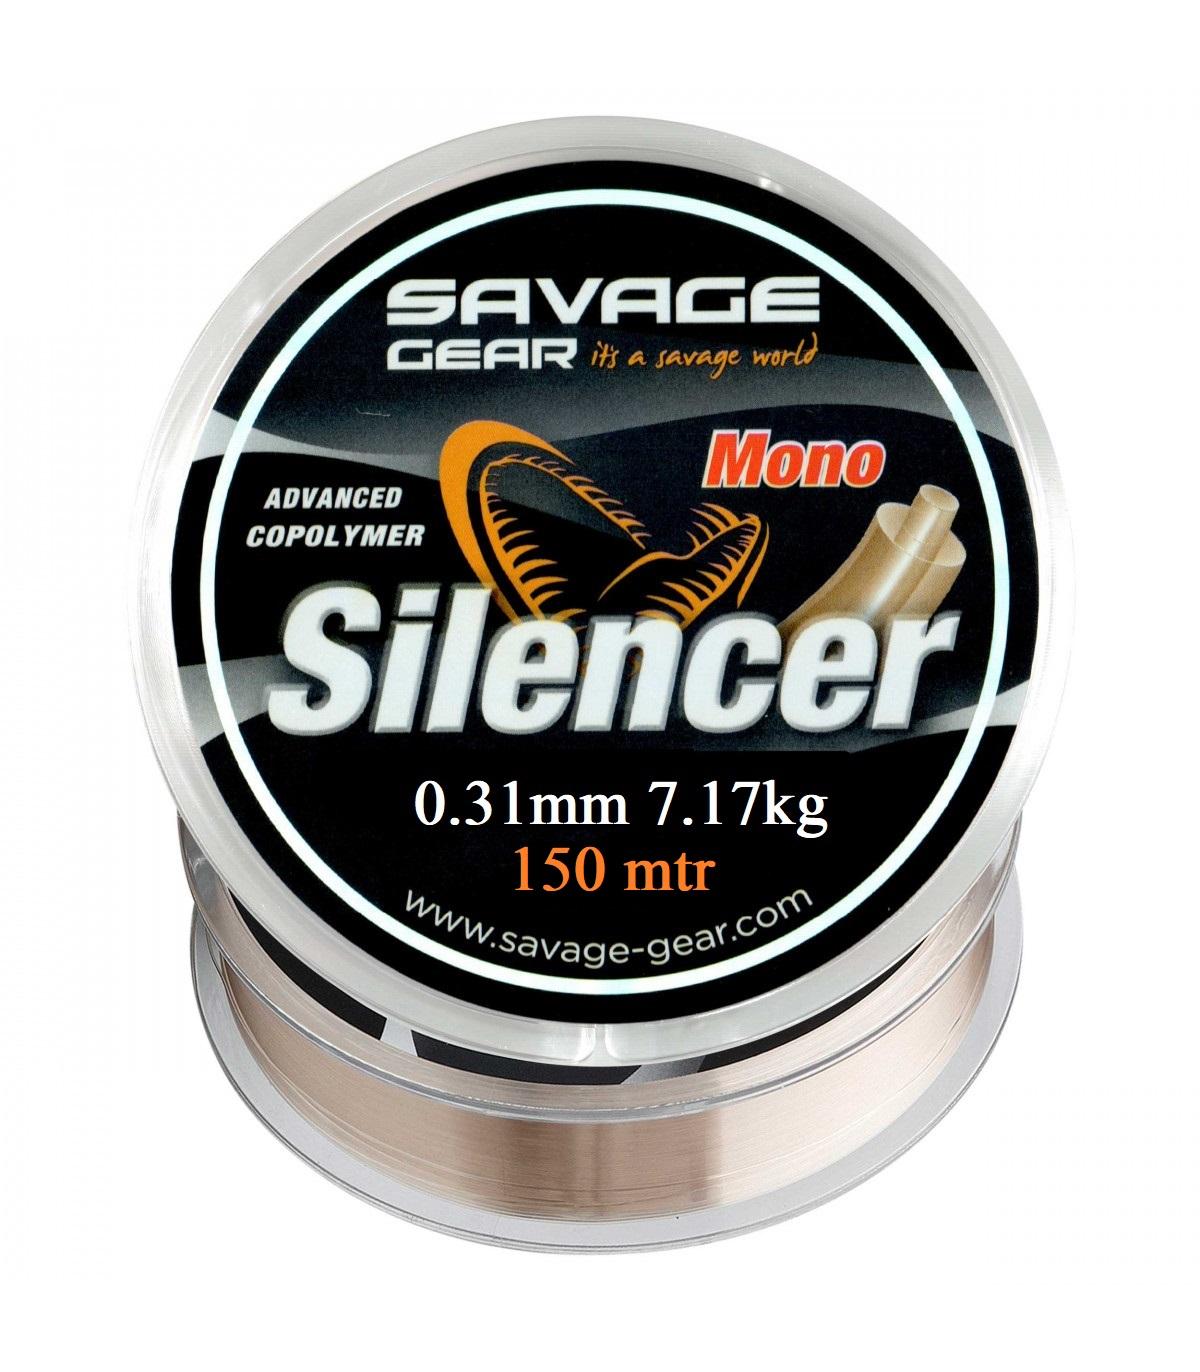 Savage Gear nylon Silencer Mono | 0.46mm 15.5kg >150mtr